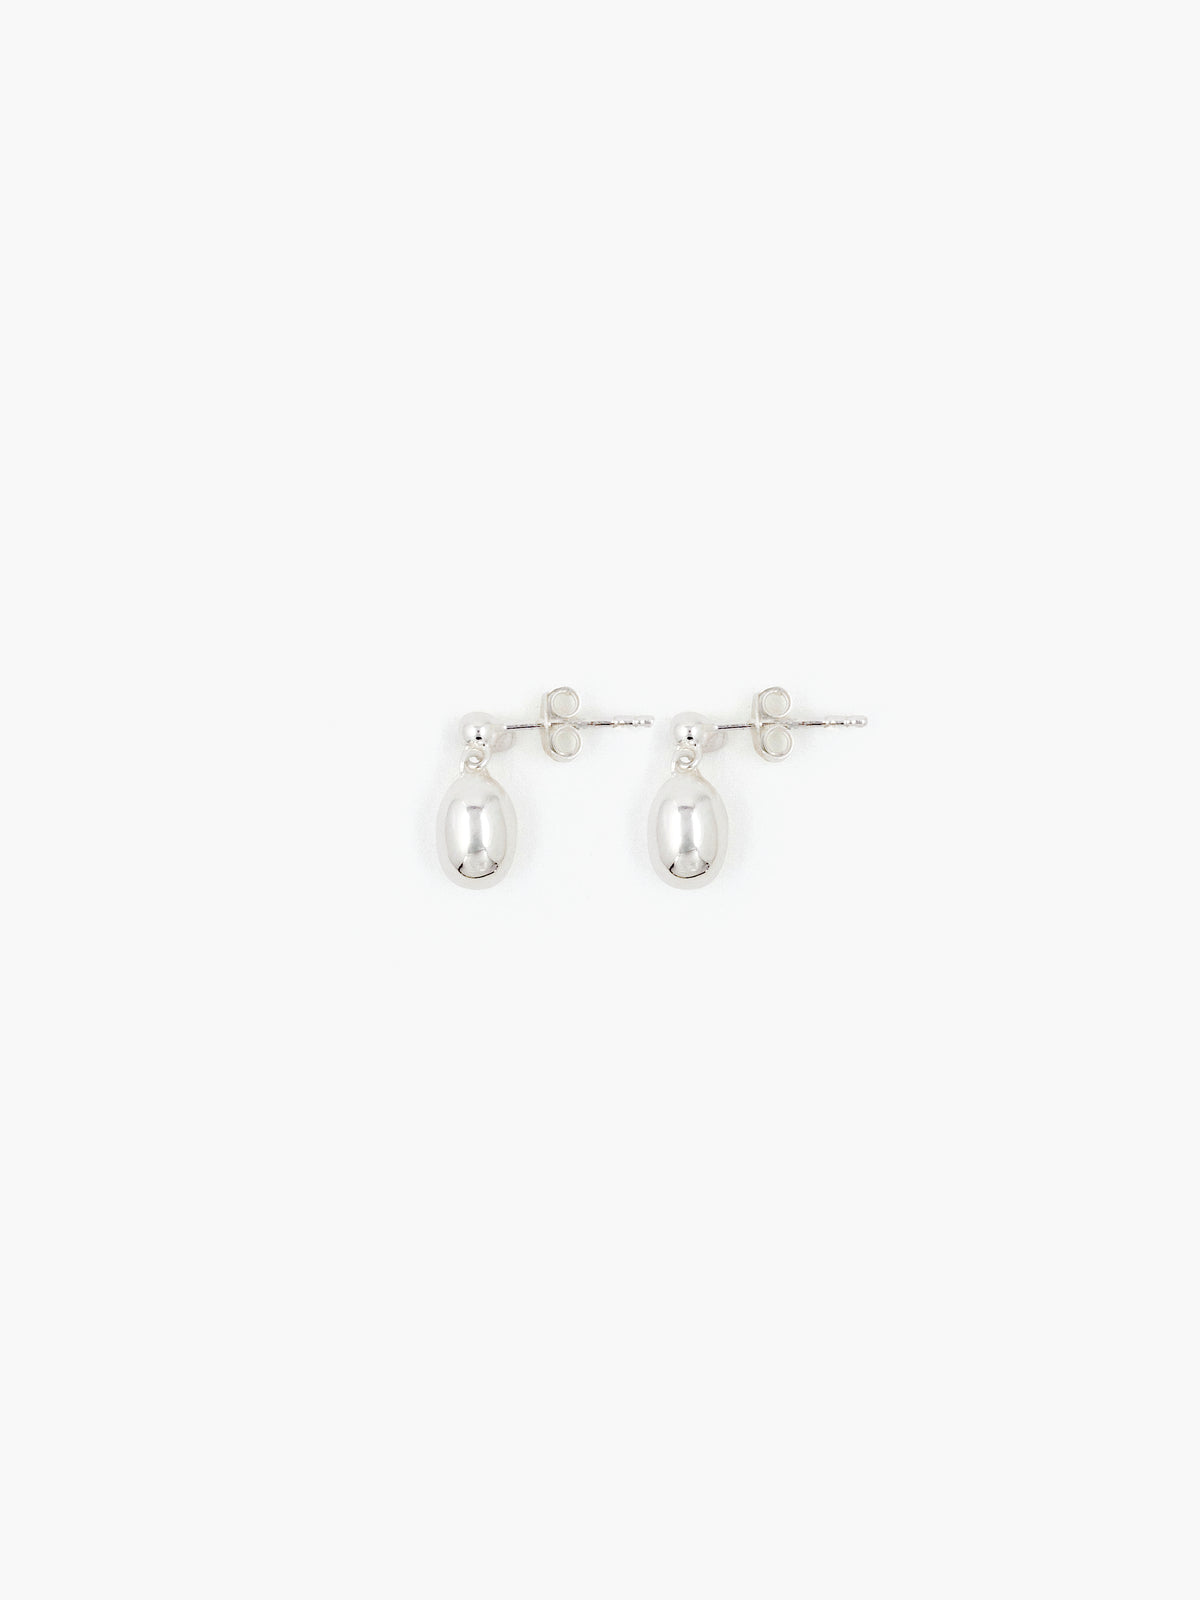 Reflection Mini Earrings - SILVER / RAGBAG (リフレクションミニイヤリング・ピアス - シルバー / RAGBAG) - ICHI GALLERY  | ジュエリー ブランド デンマーク 女性  小物 アクセサリー ギフト 贈り物 プレゼント